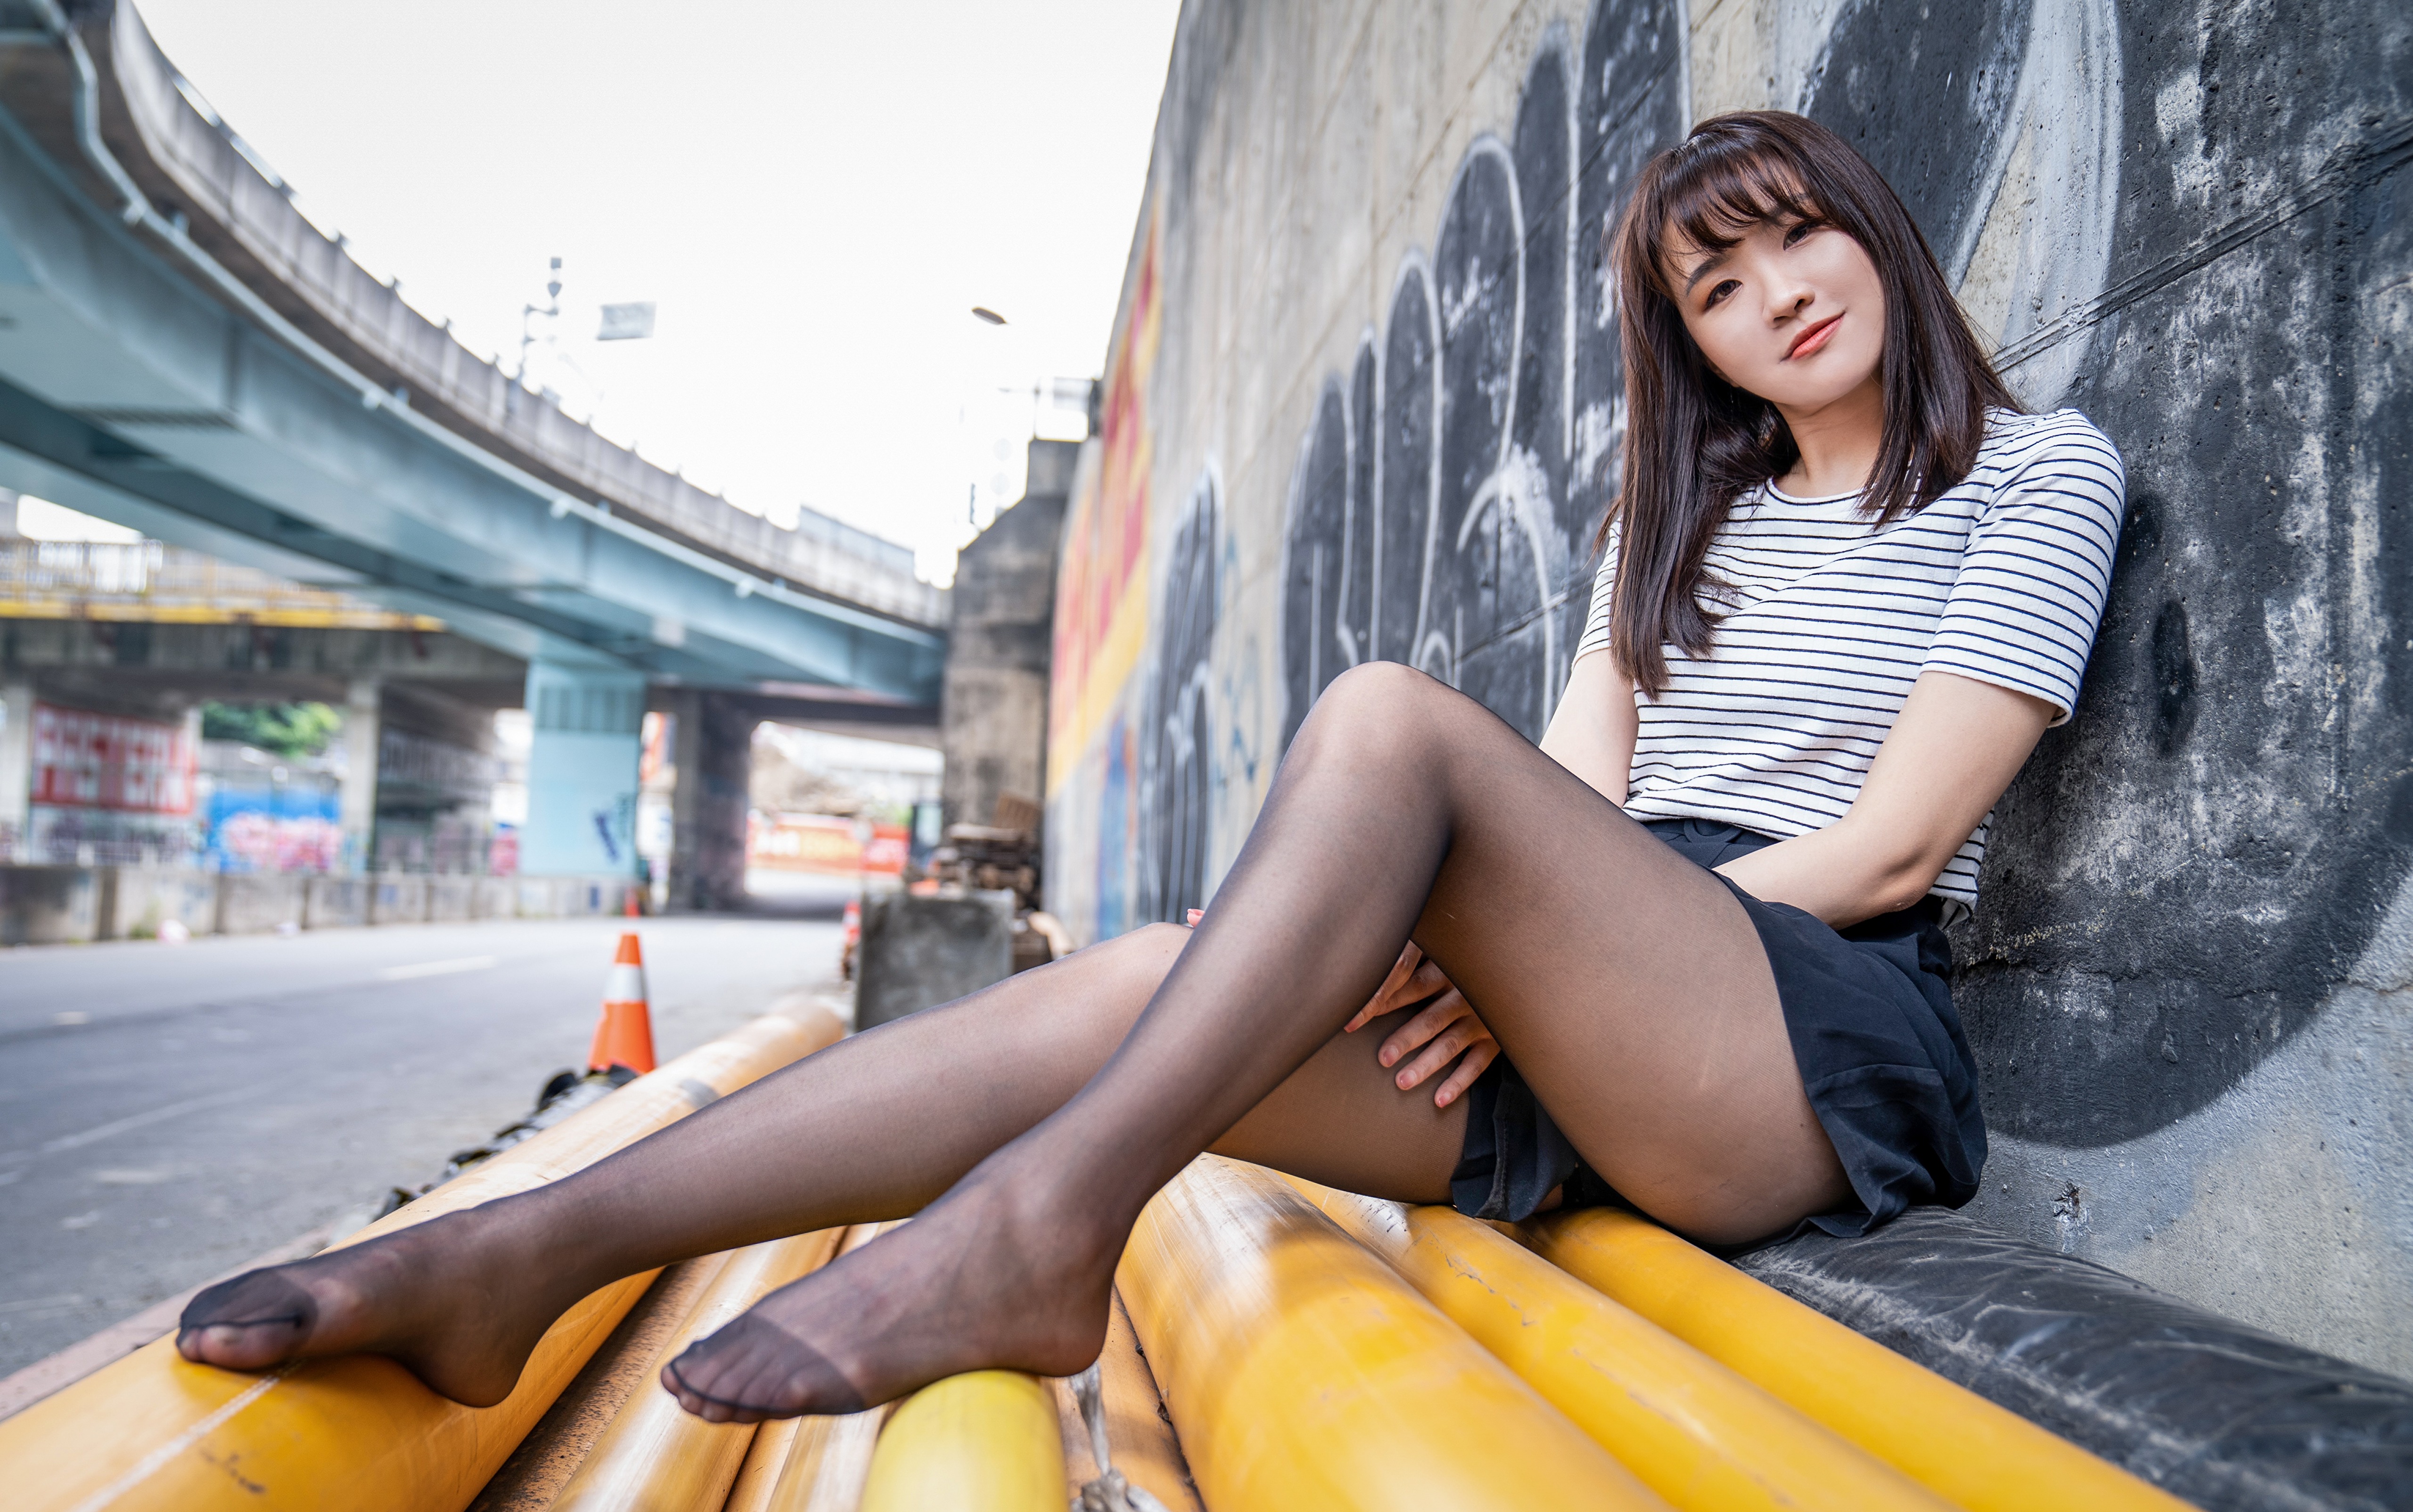 Asian Model Women Long Hair Dark Hair Nylons Sitting Skirt Striped Shirt Leaning Wall Graffiti Bridg 5120x3209